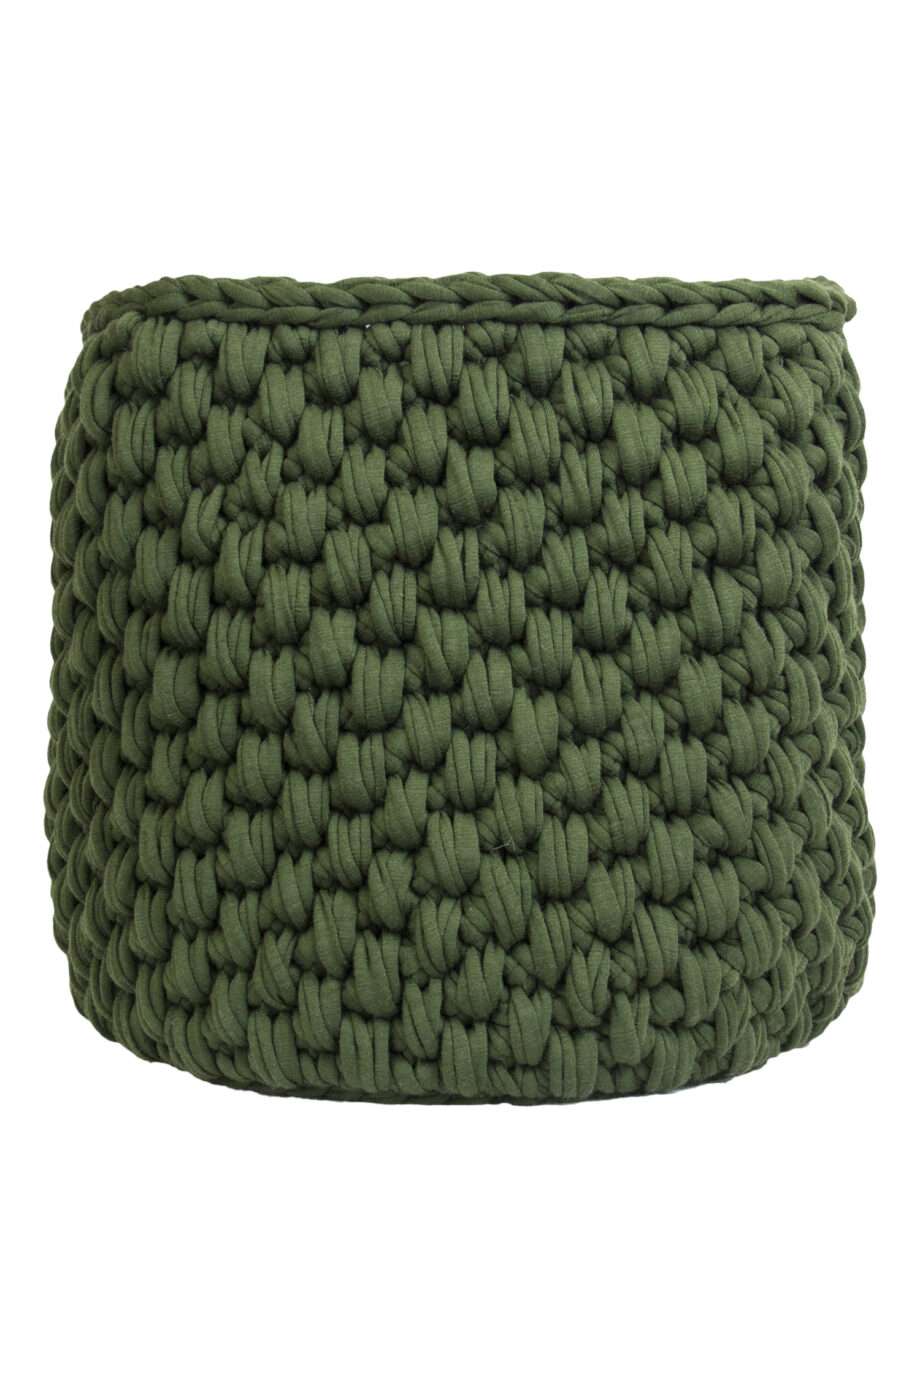 peony hunter green crochet cotton basket large